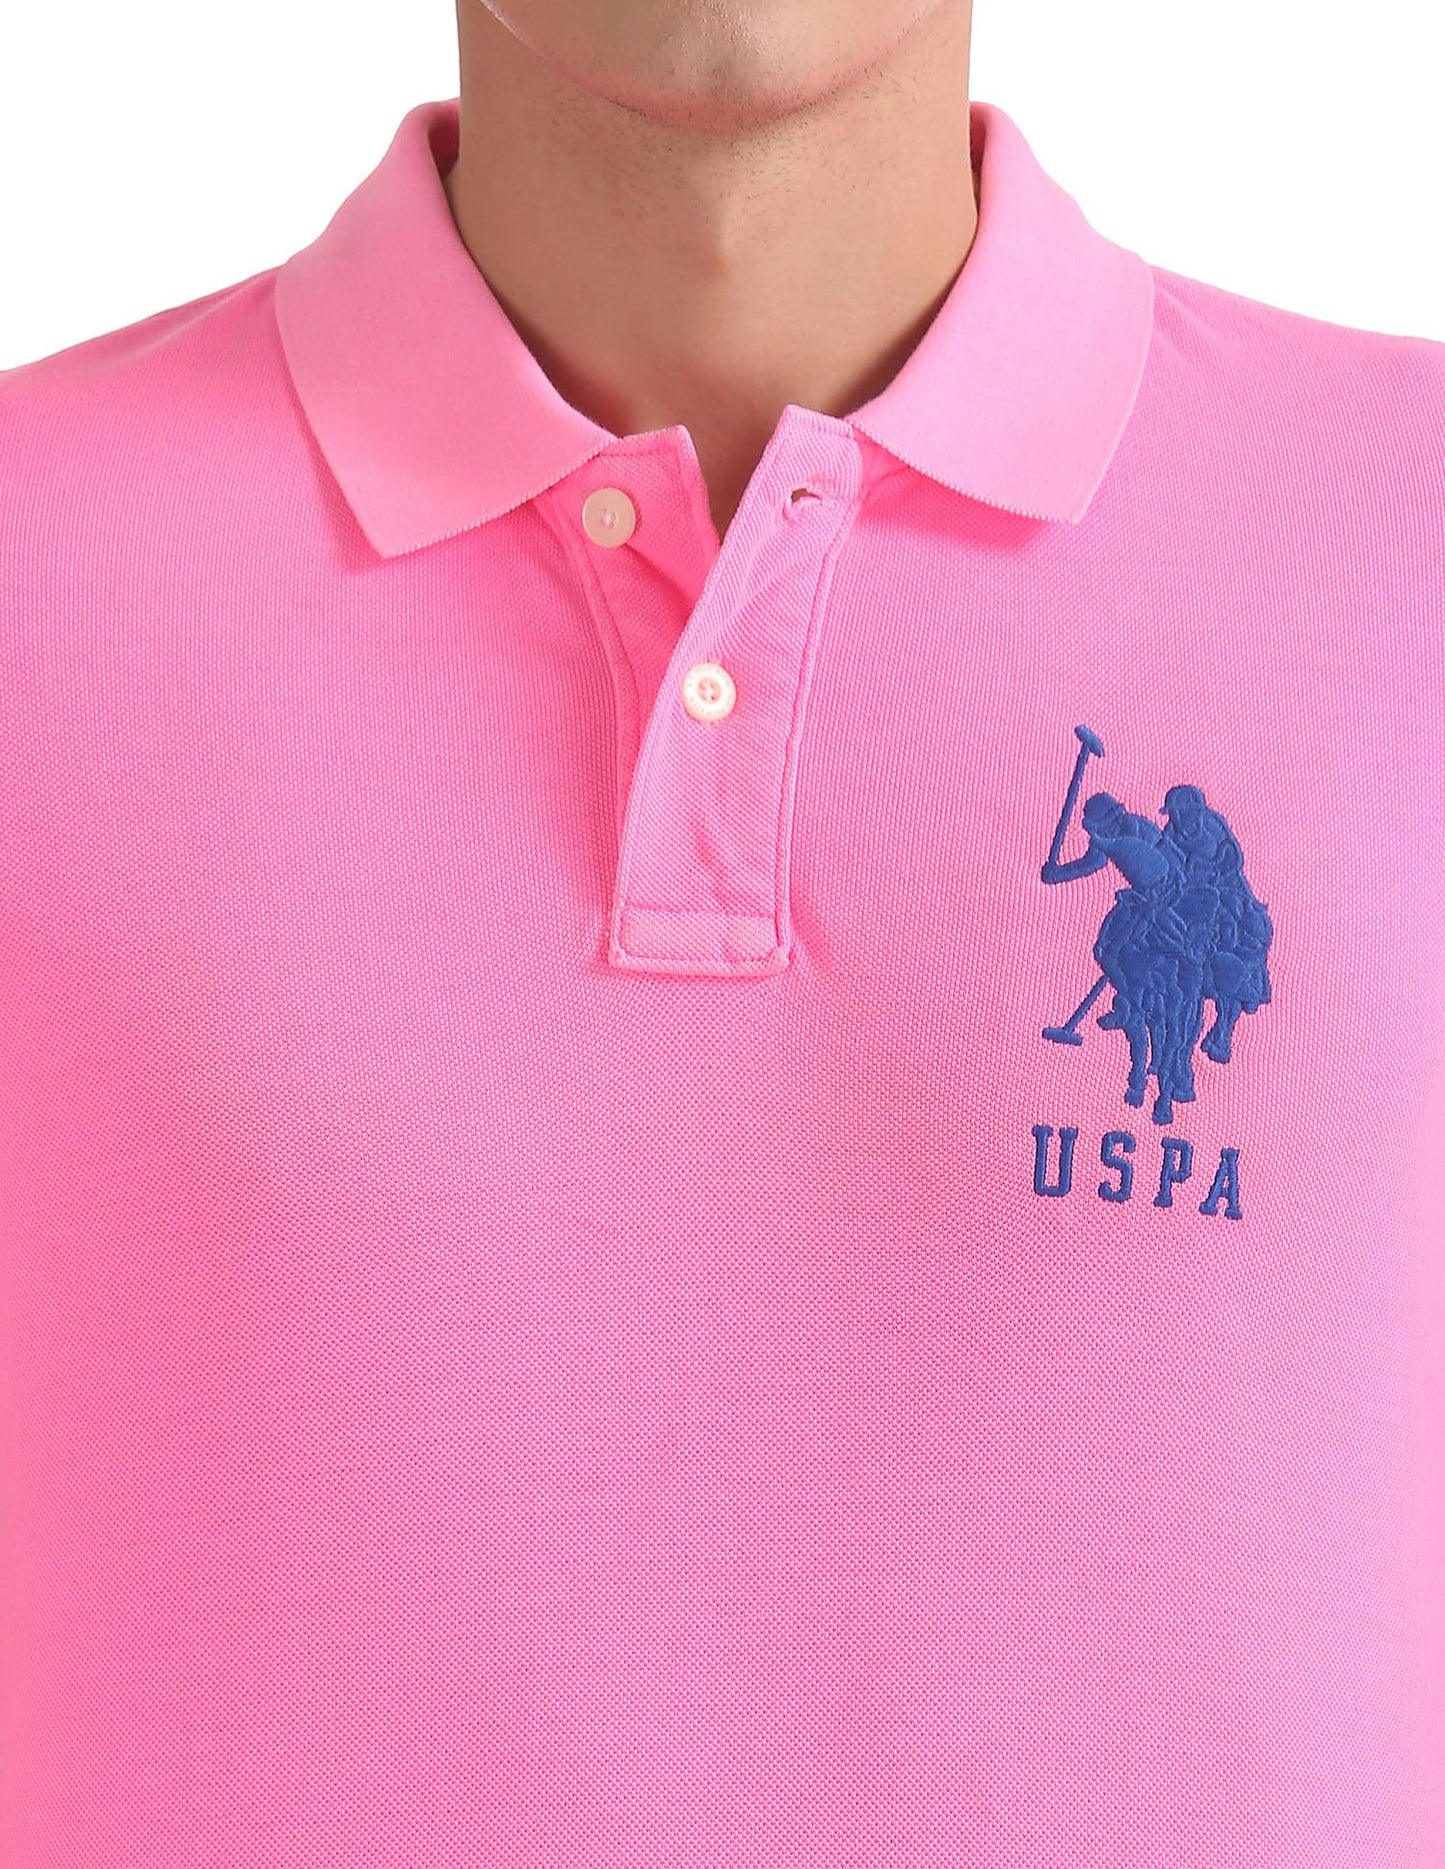 US Polo Association Men's Regular T-Shirt (Tee-Fusion Coral)